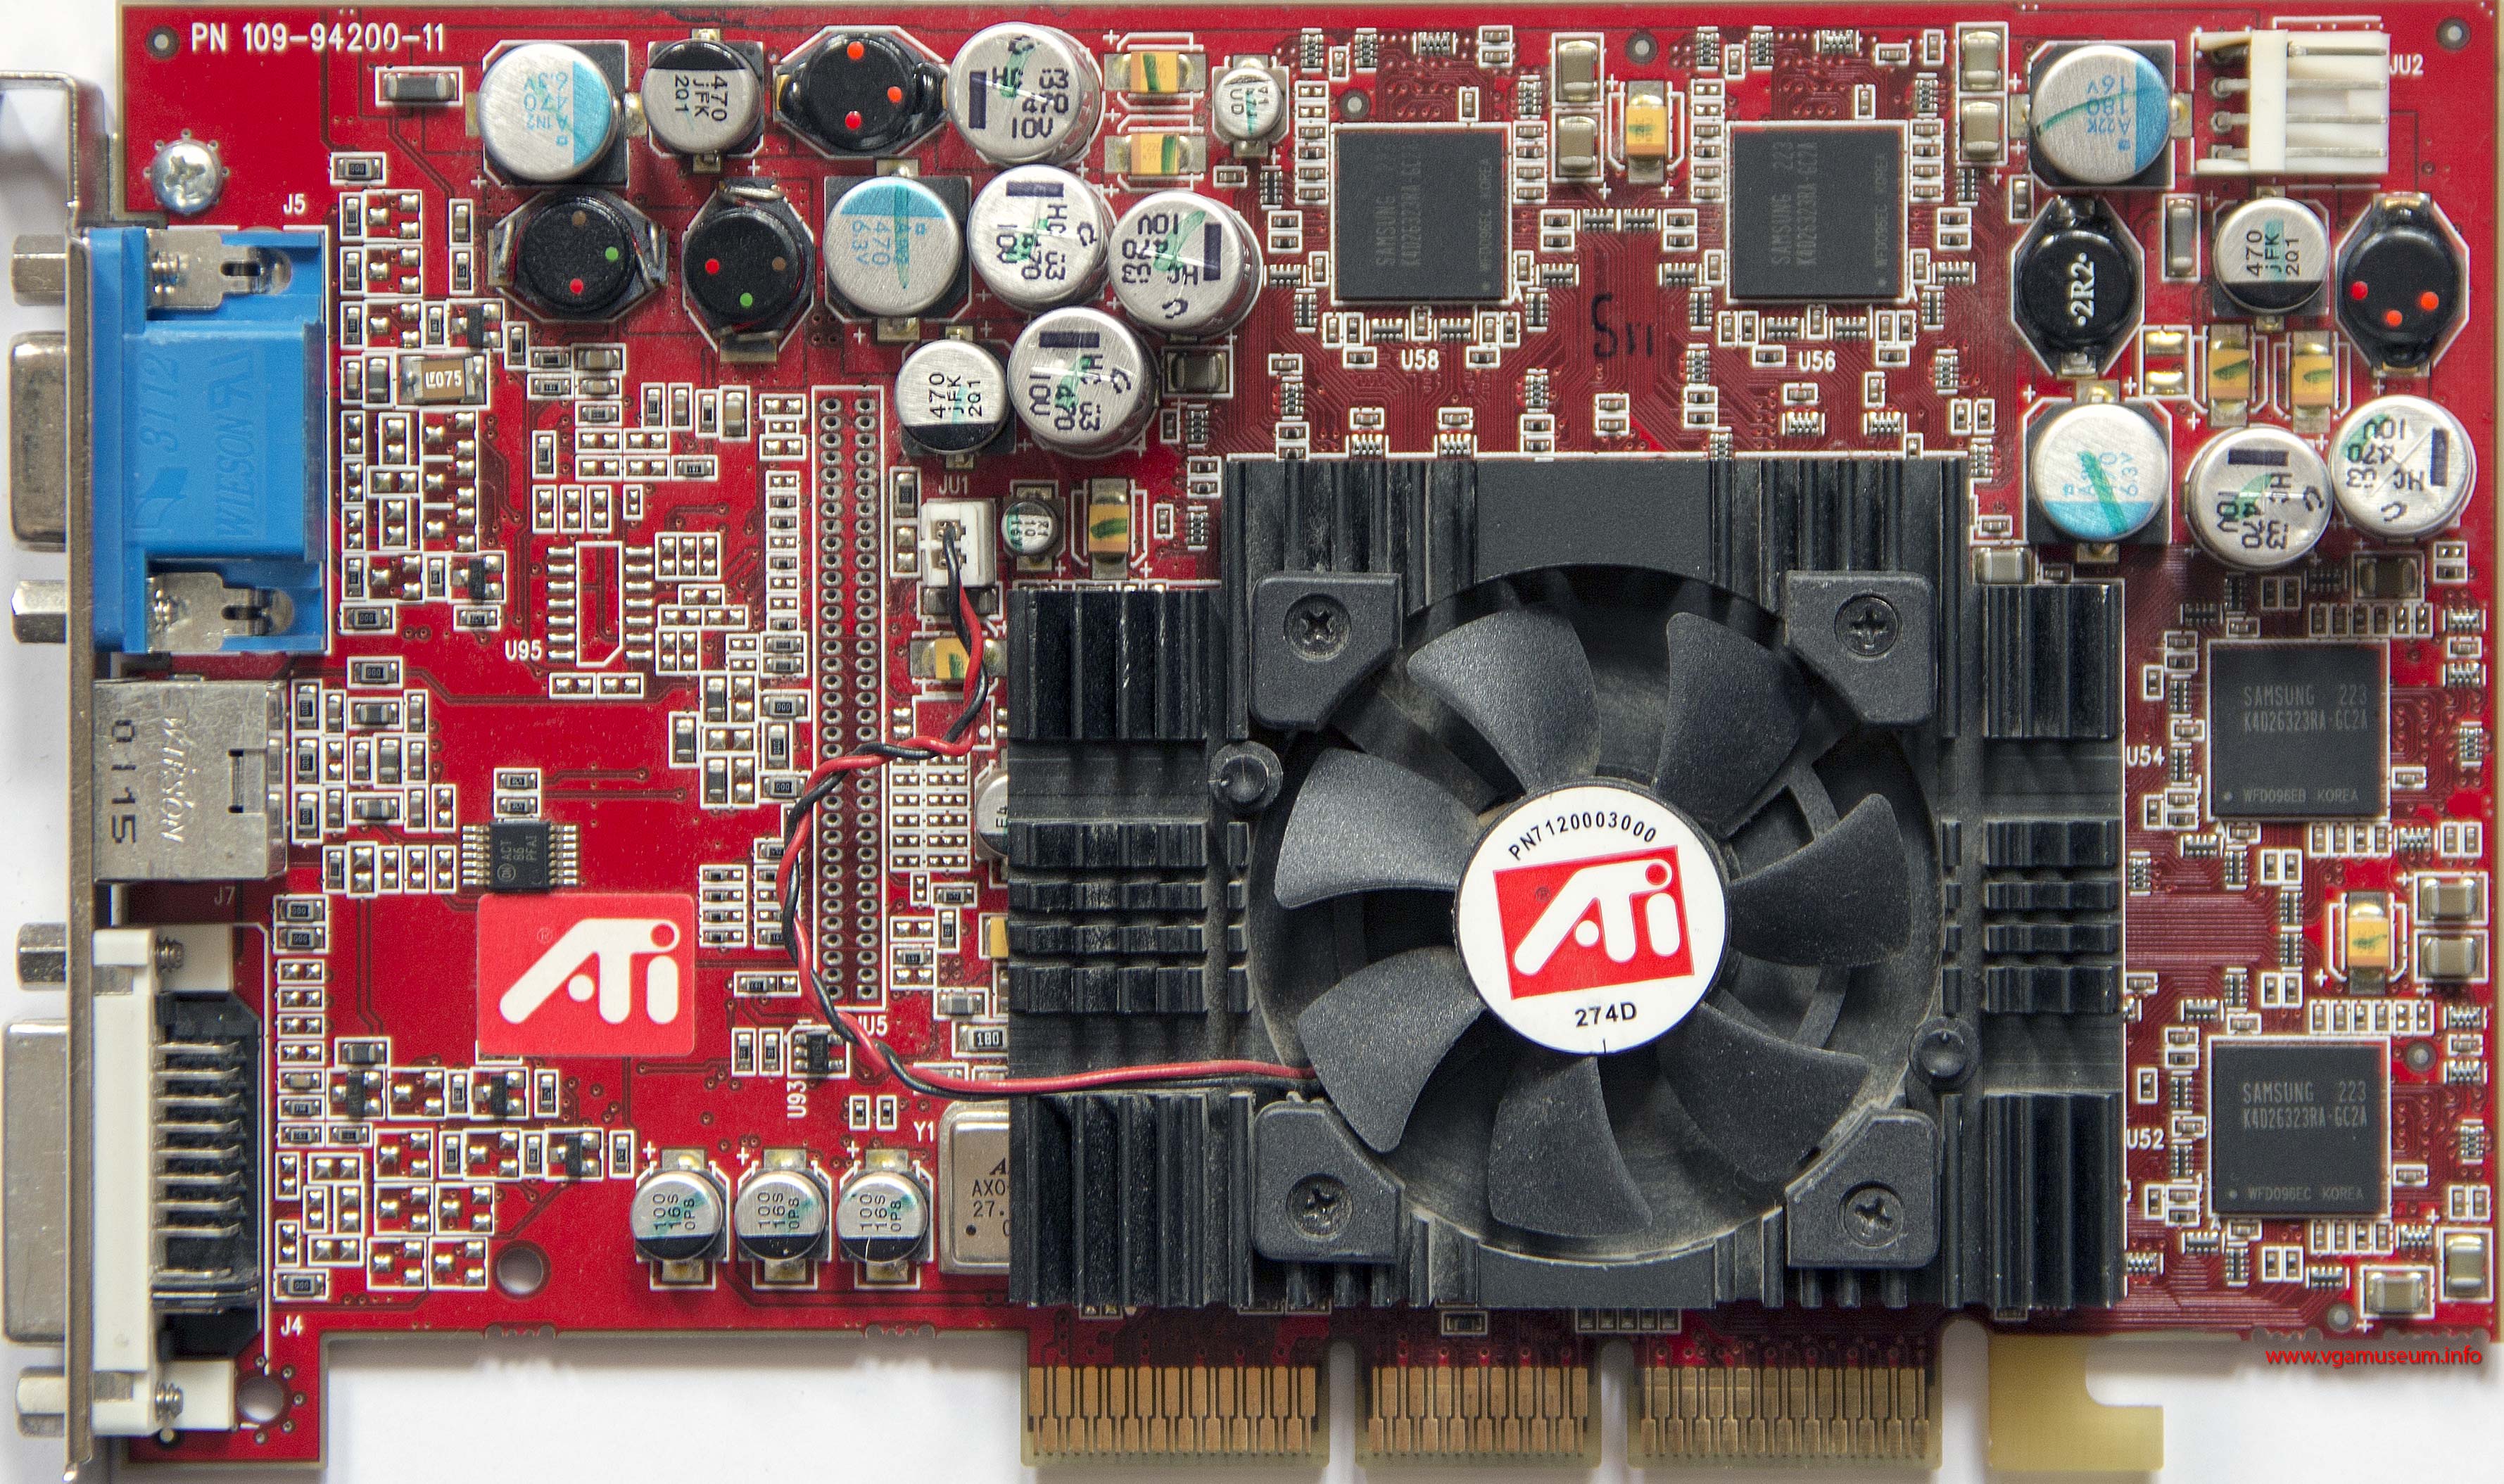 The Ultimate GPU Benchmark (2006 - 2010) - Hardware museum